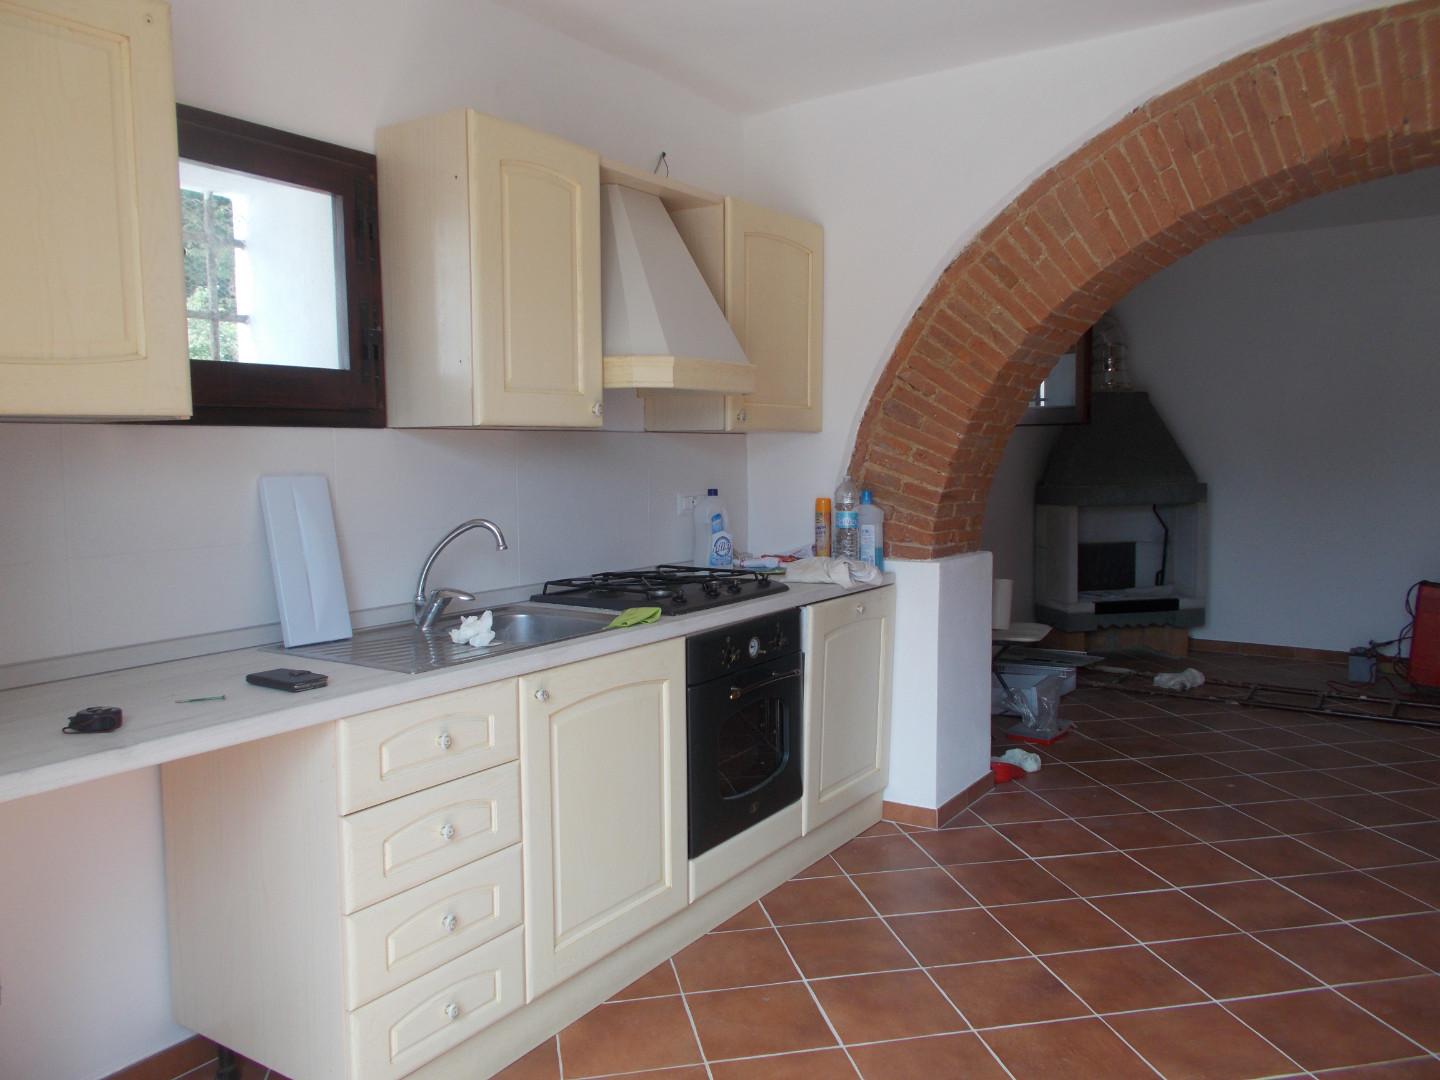 Apartment for rent in Calcinaia (PI)